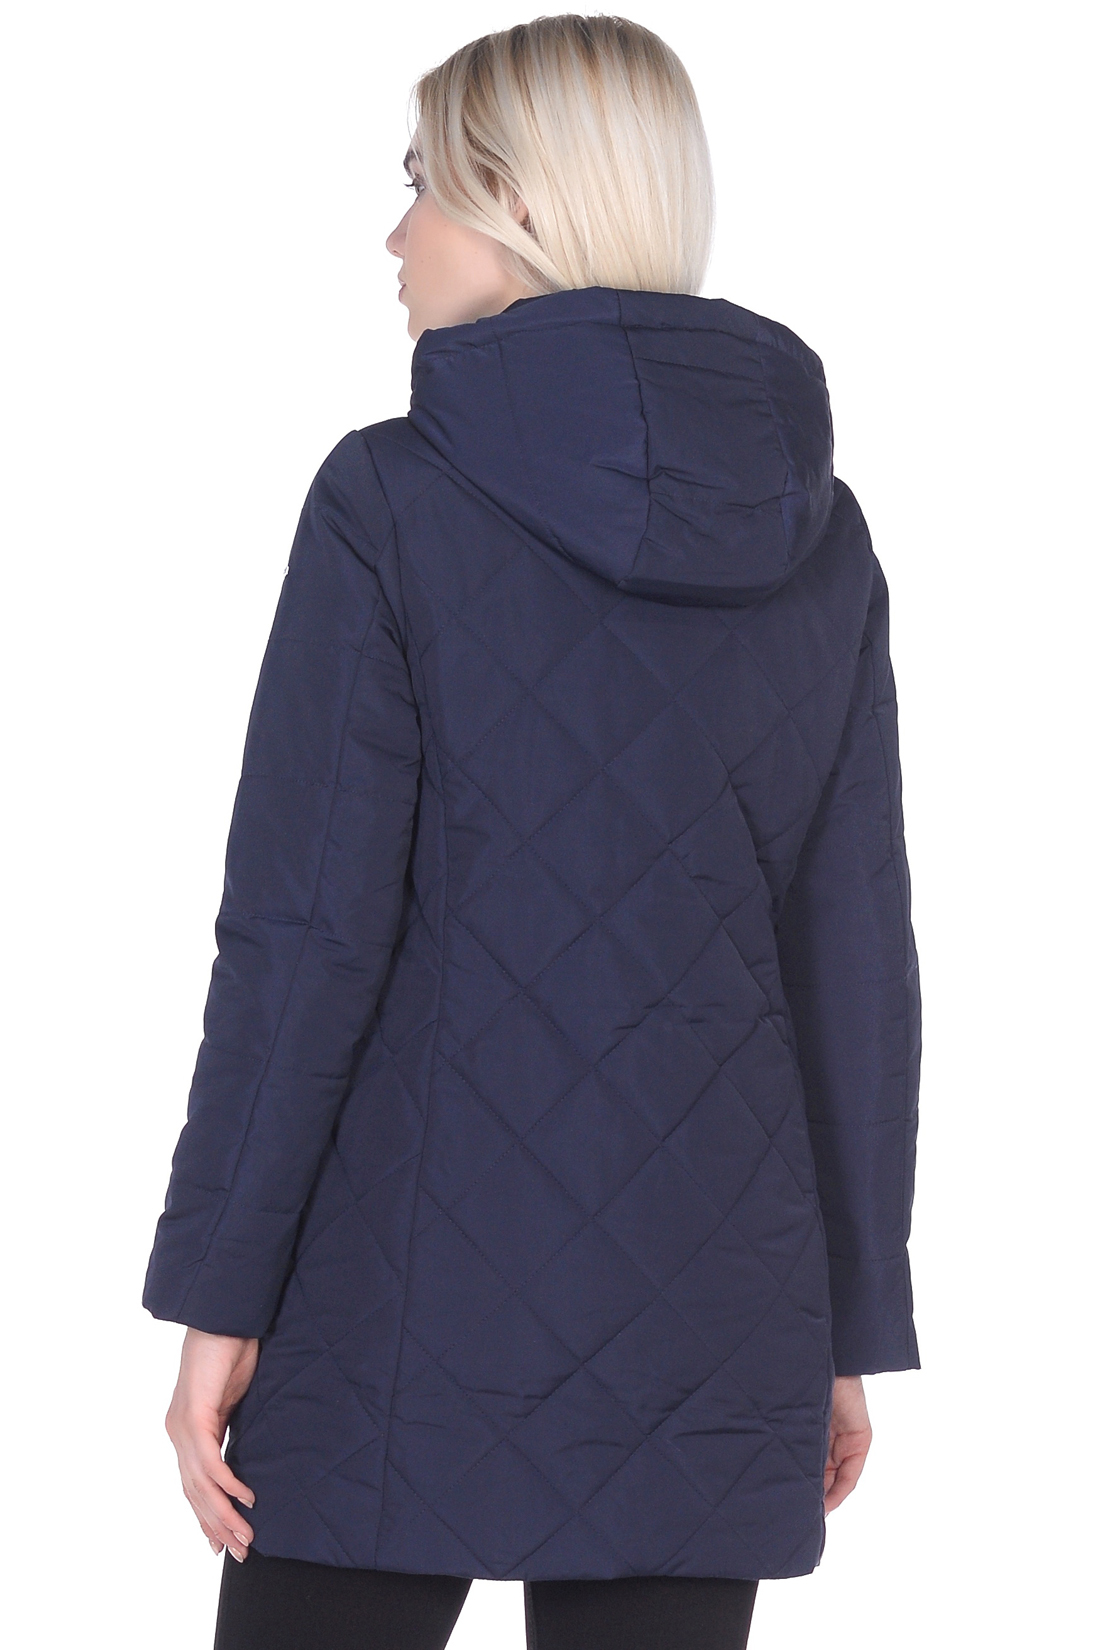 Удлинённая стёганая куртка с капюшоном (арт. baon B039022), размер L, цвет синий Удлинённая стёганая куртка с капюшоном (арт. baon B039022) - фото 2